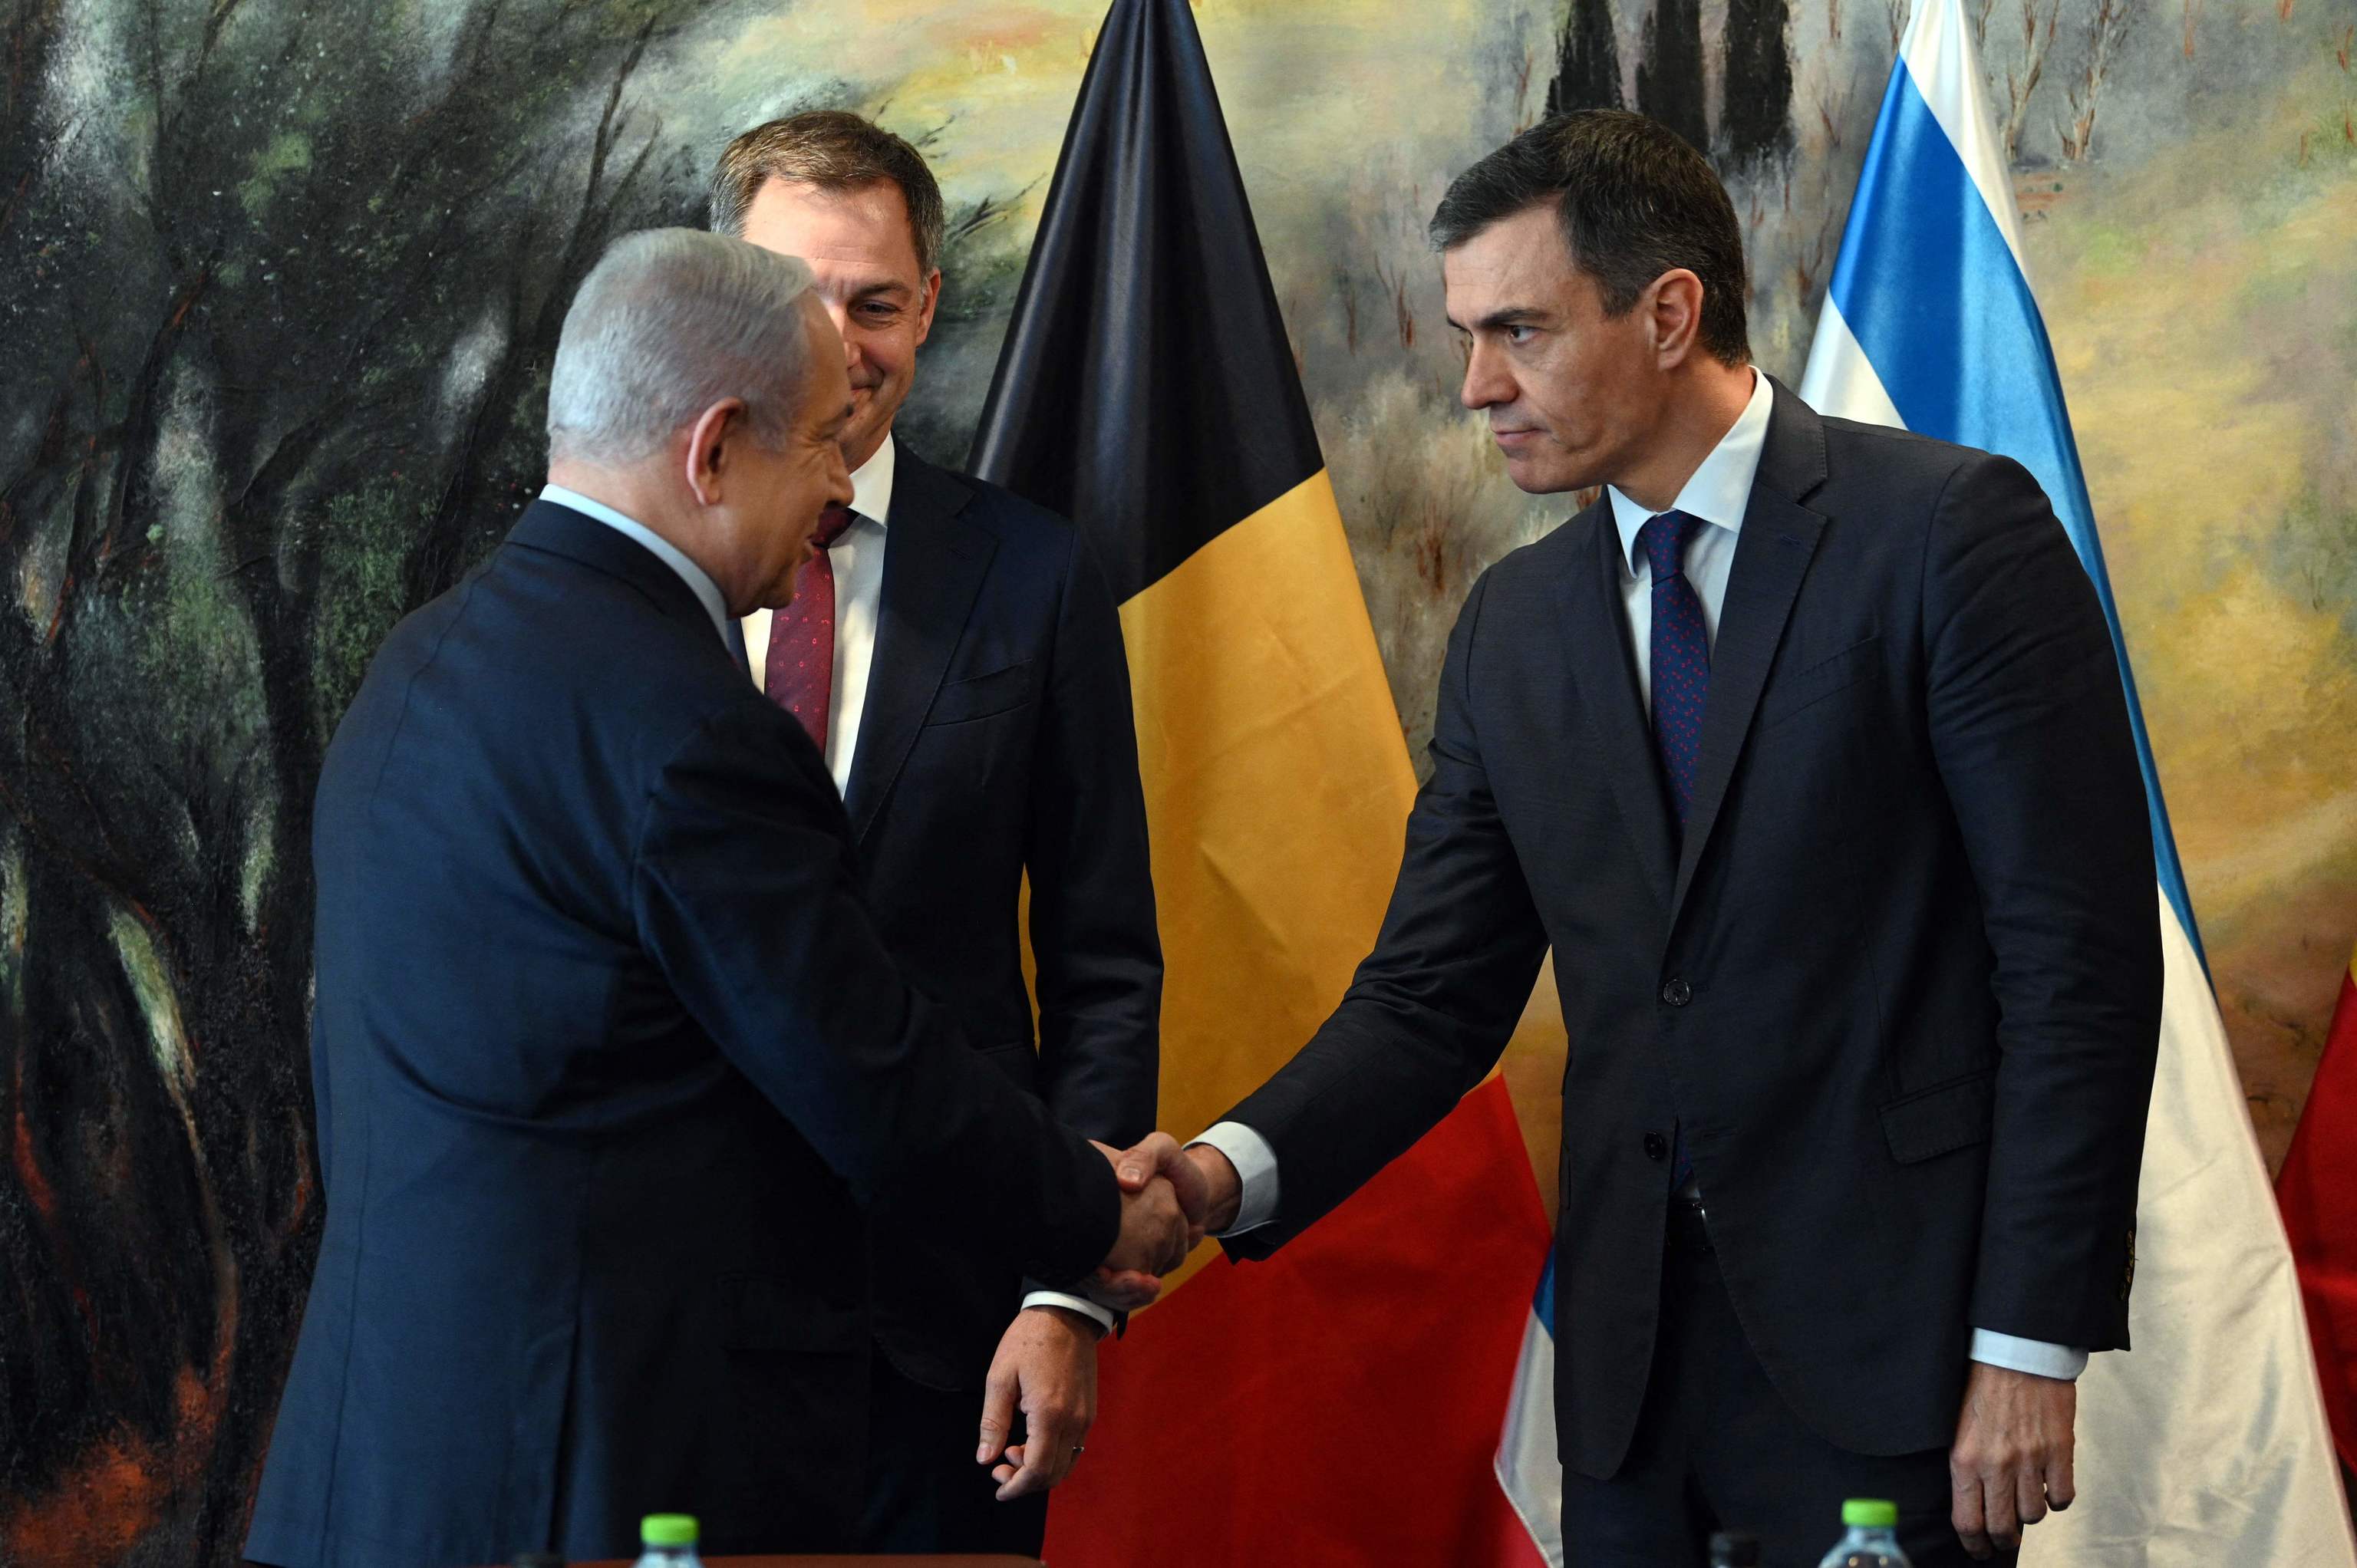 Pedro Sánchez estrechando la mano al presidente israelí Netanyahu